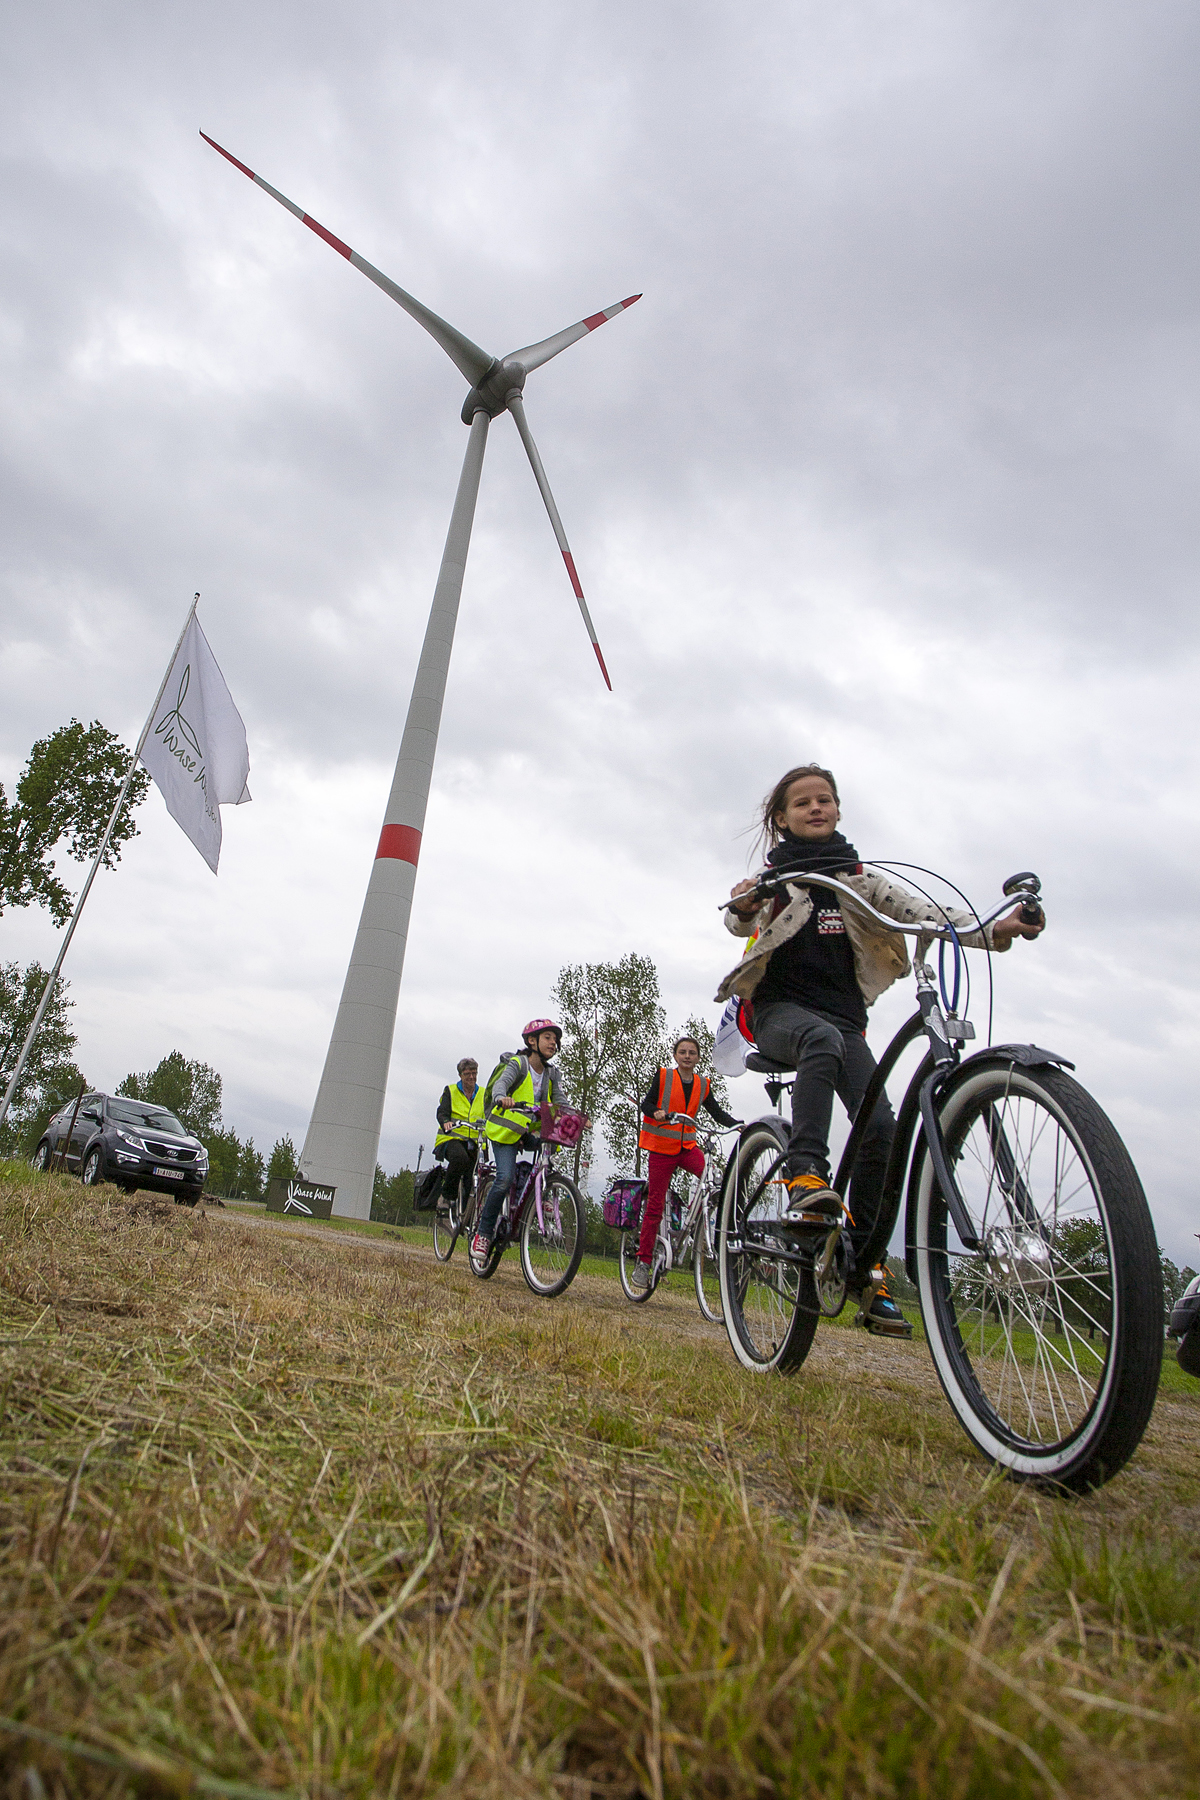 Kids ride their bikes to visit the turbine